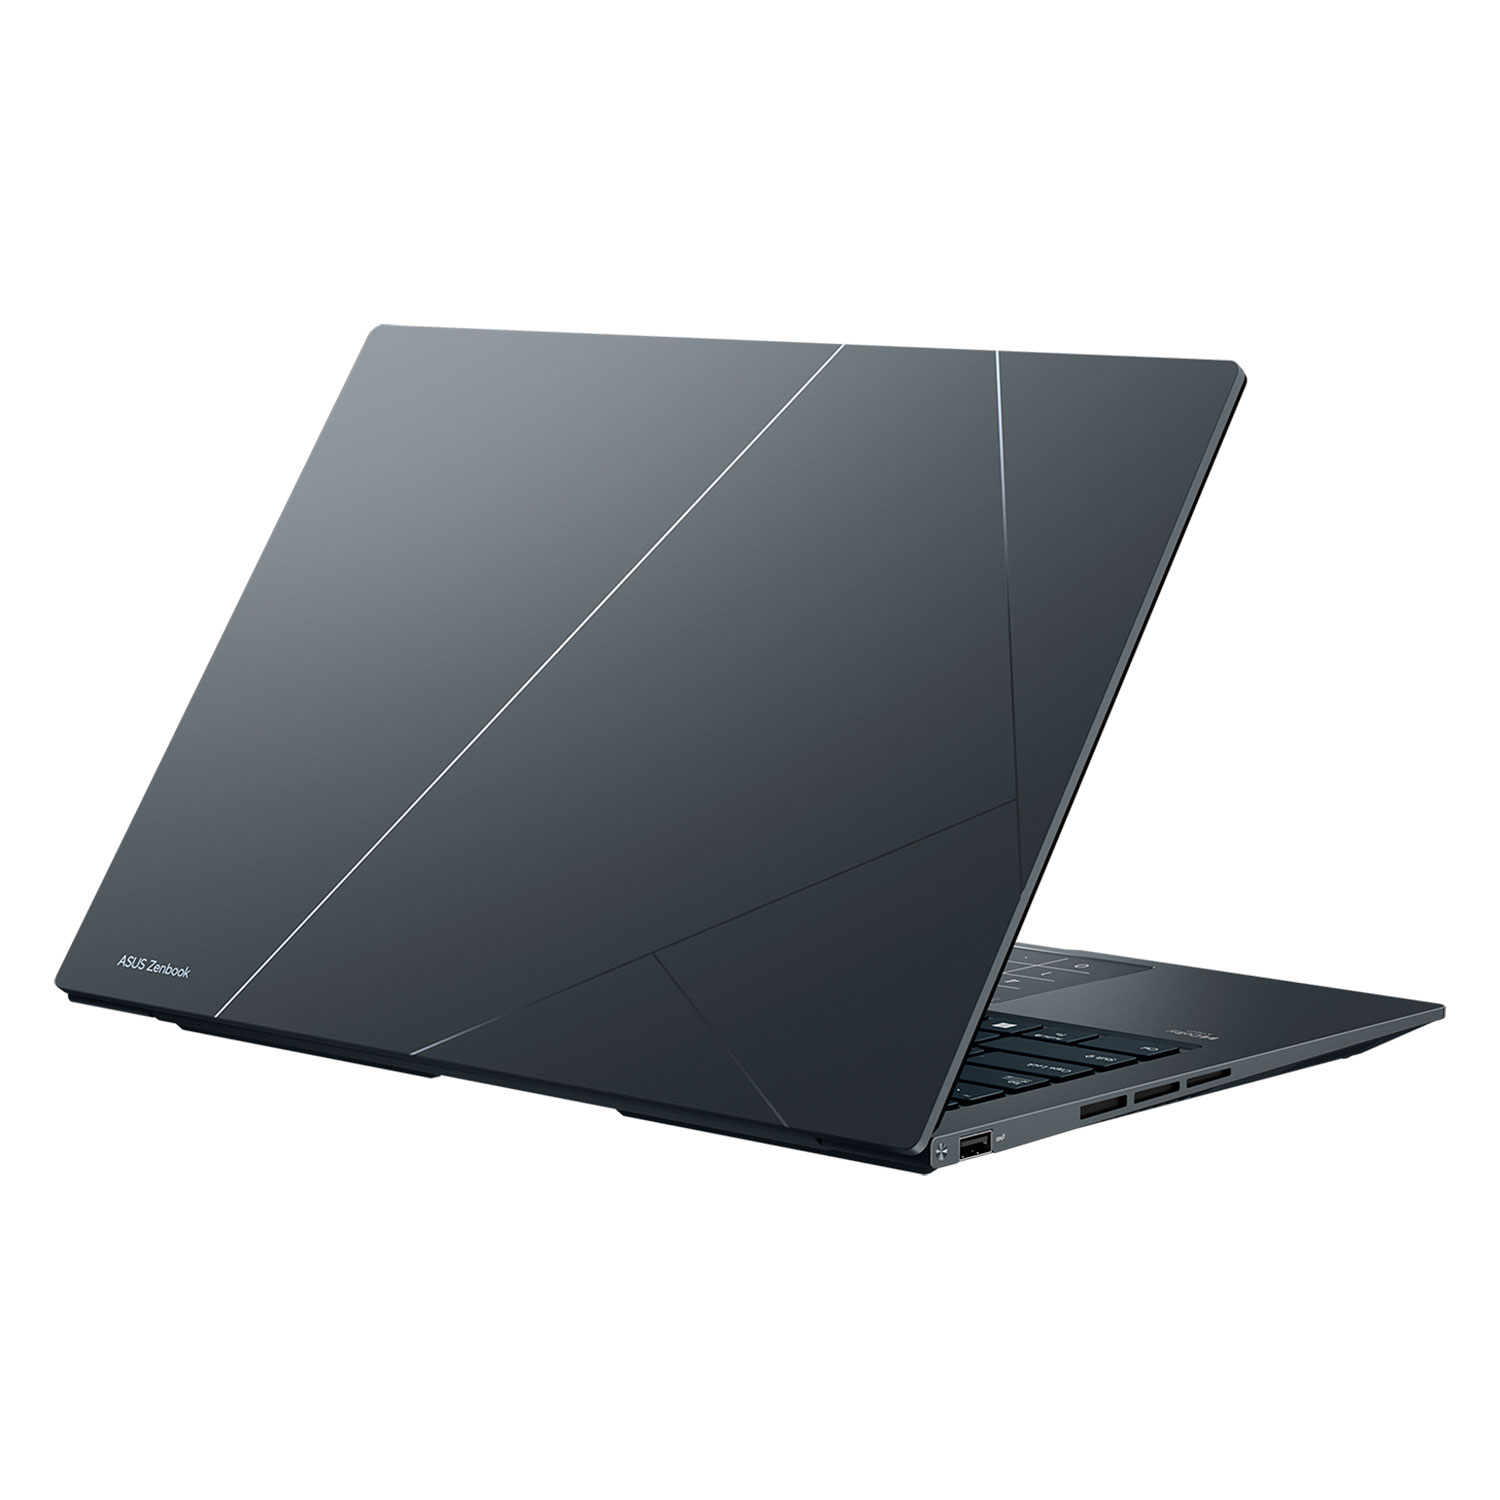 Notebook Asus Zenbook Q410VA-EVO.I5512 14.5" Intel Core i5-13500H 512GB SSD 8GB RAM - Cinza